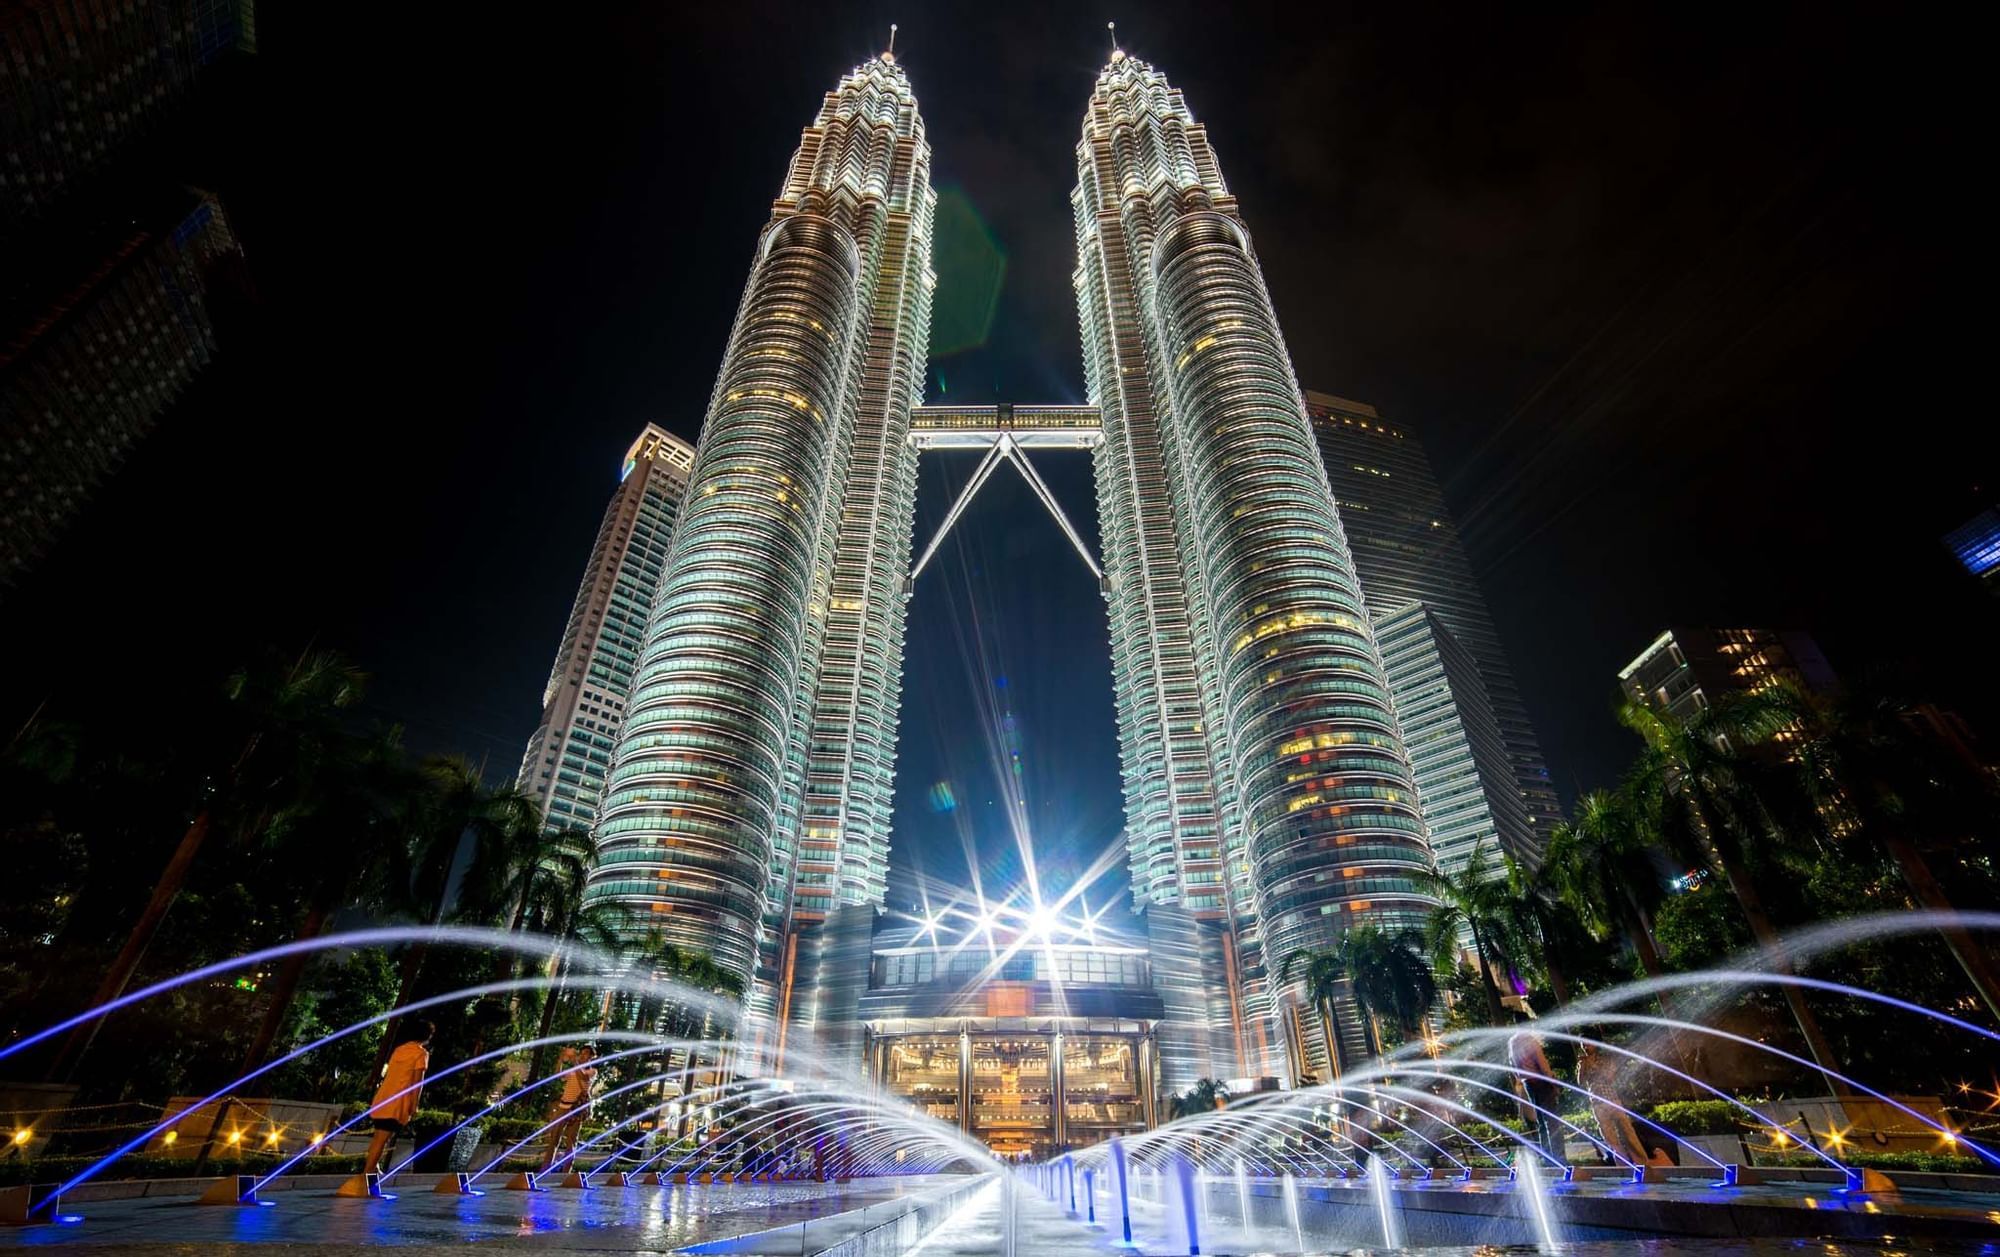 Iconic Petronas Twin Tower 2 at night near Sunway Lagoon Hotel